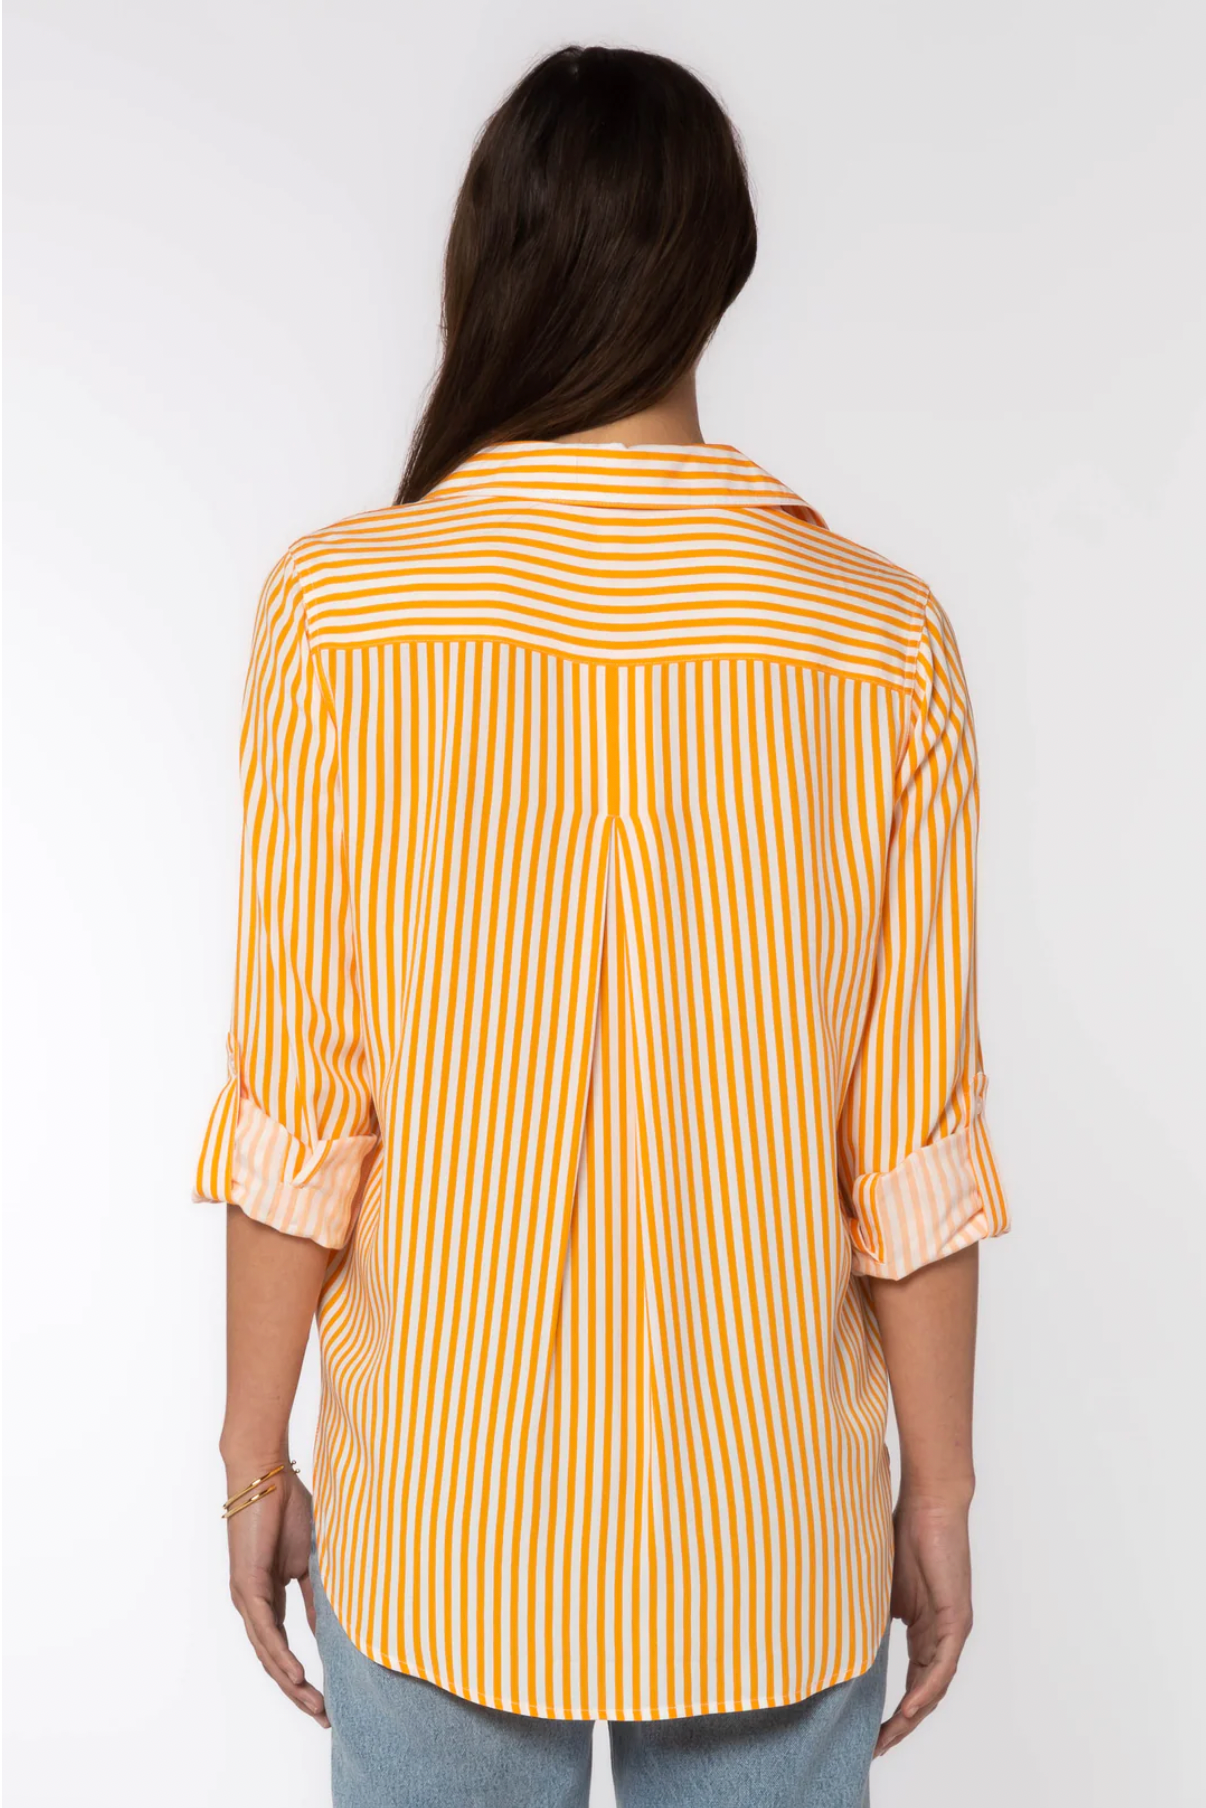 Elisa Orange Stripe Button DownShirt